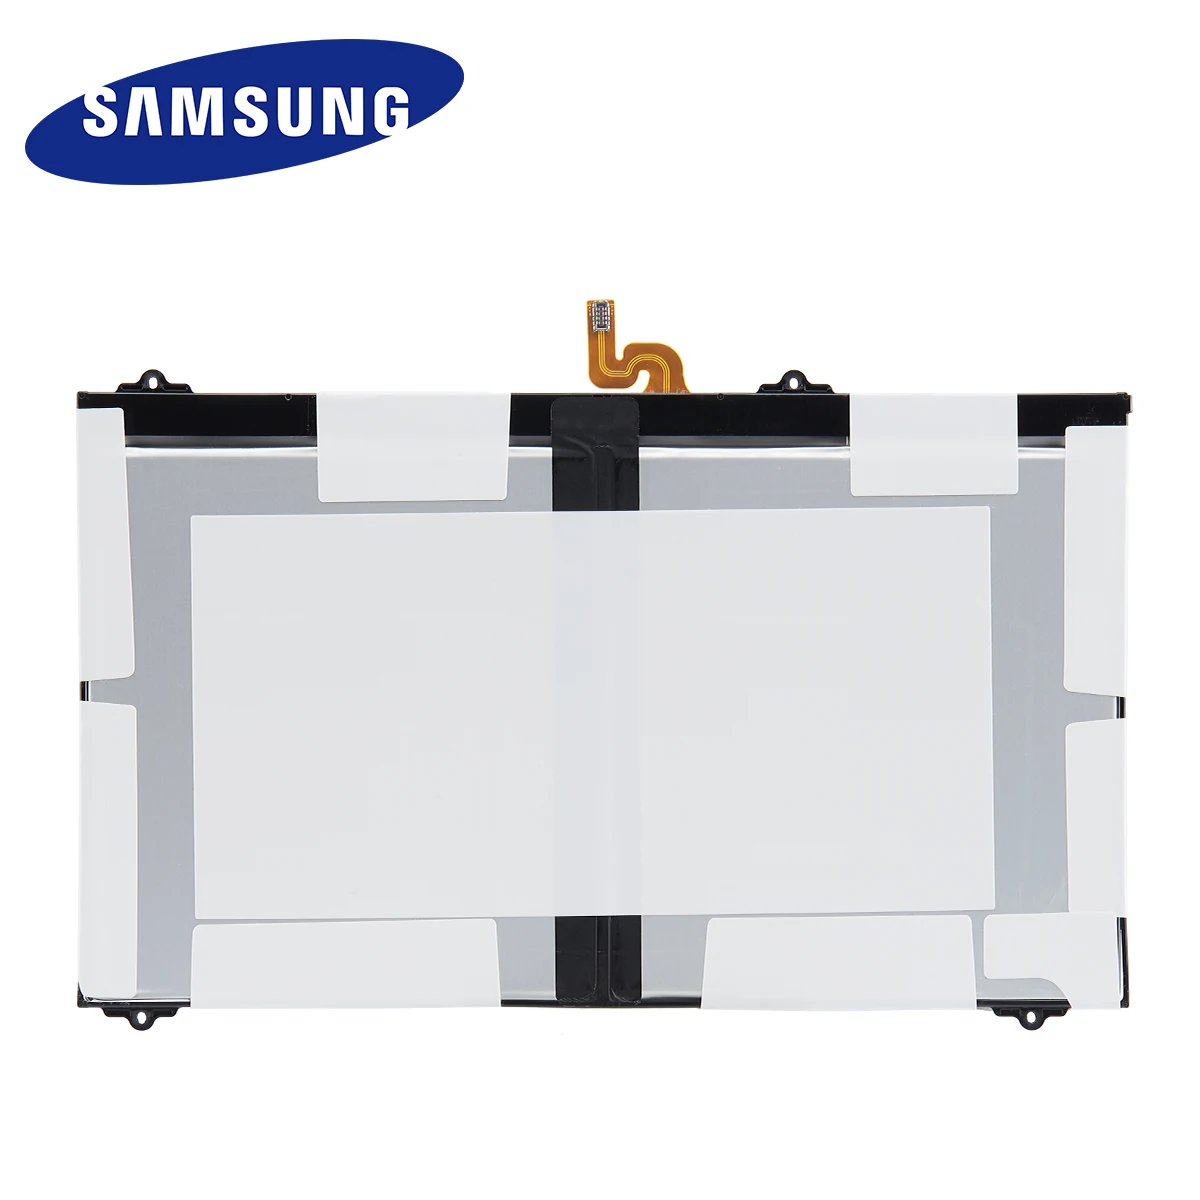 Samsung-bateria original para tablet, samsung galaxy s2, 9.7, t815c